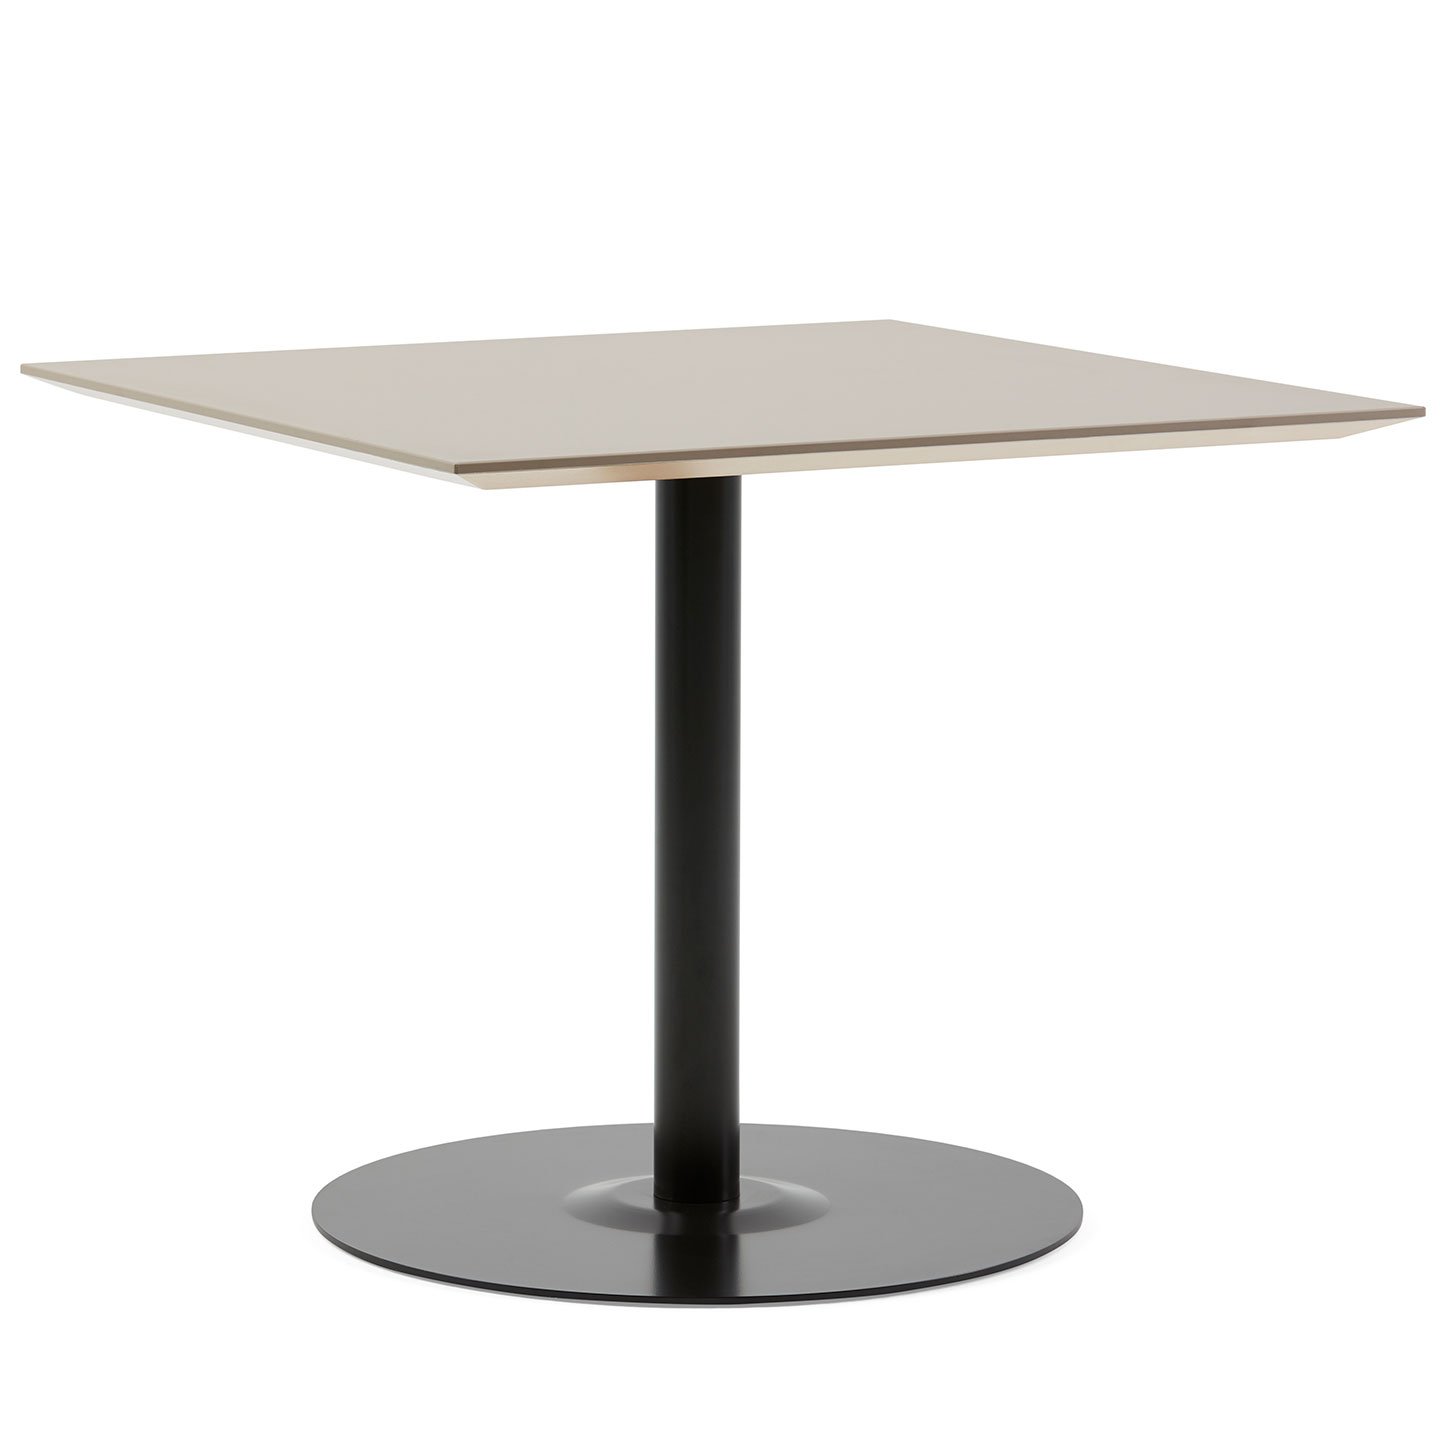 Haworth Jive Whitesweep table with rectangular top and circular black base